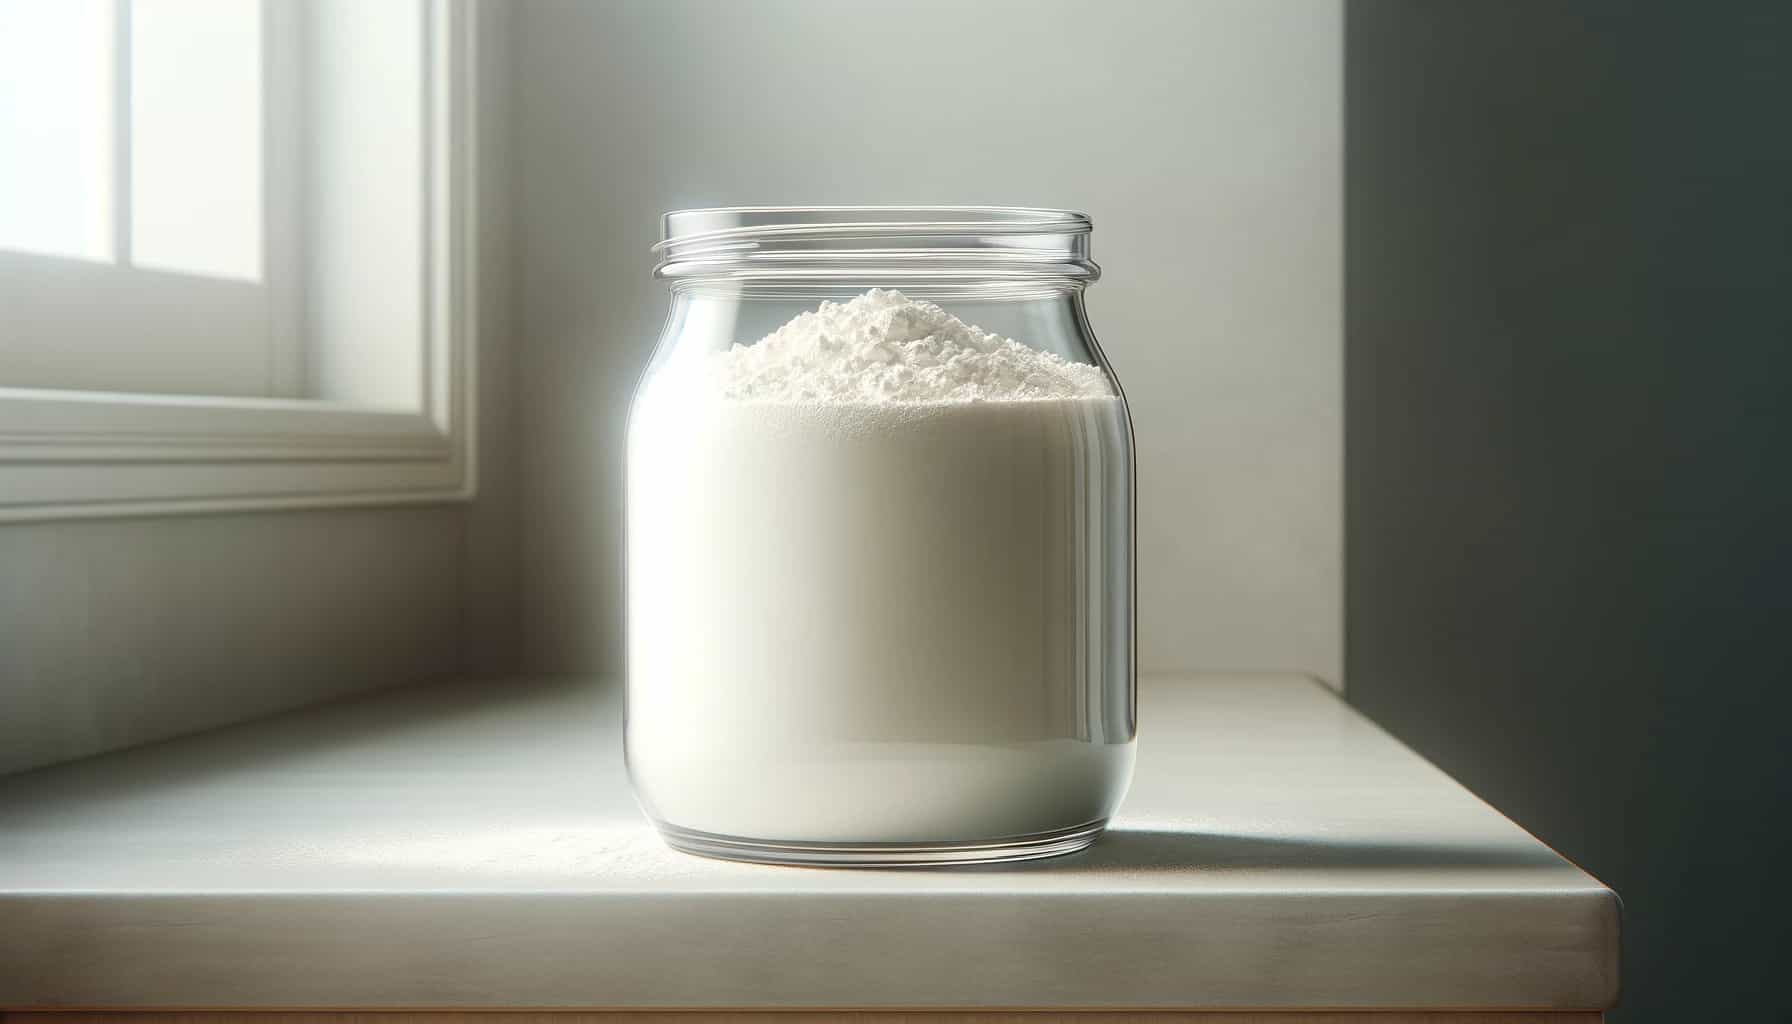 Powdered milk, in glass jar